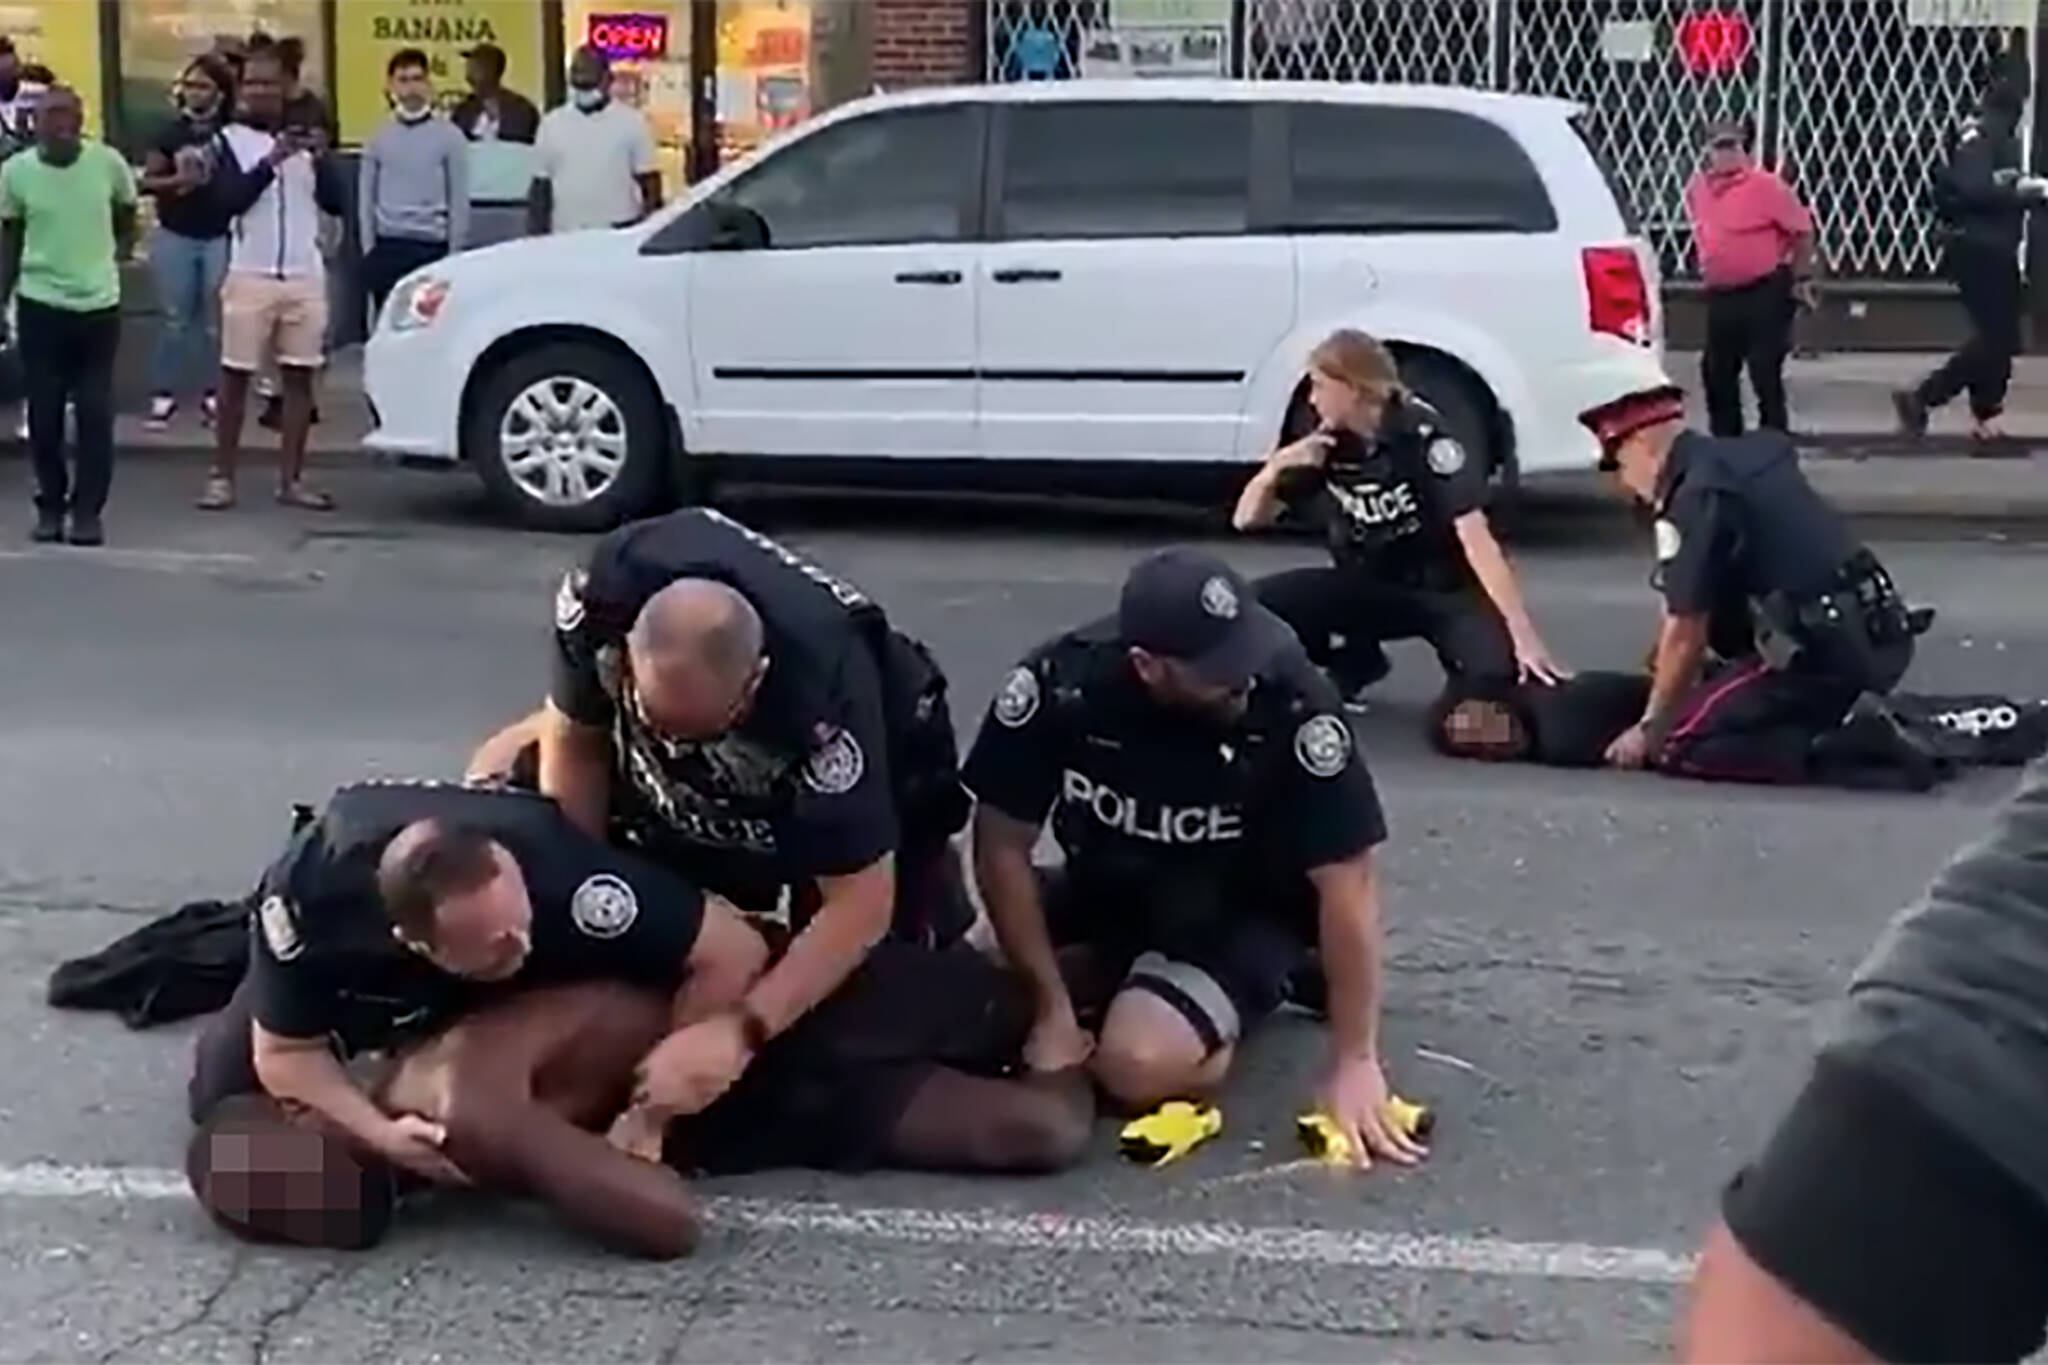 Videos capture violent police takedown of Black man at Toronto protest